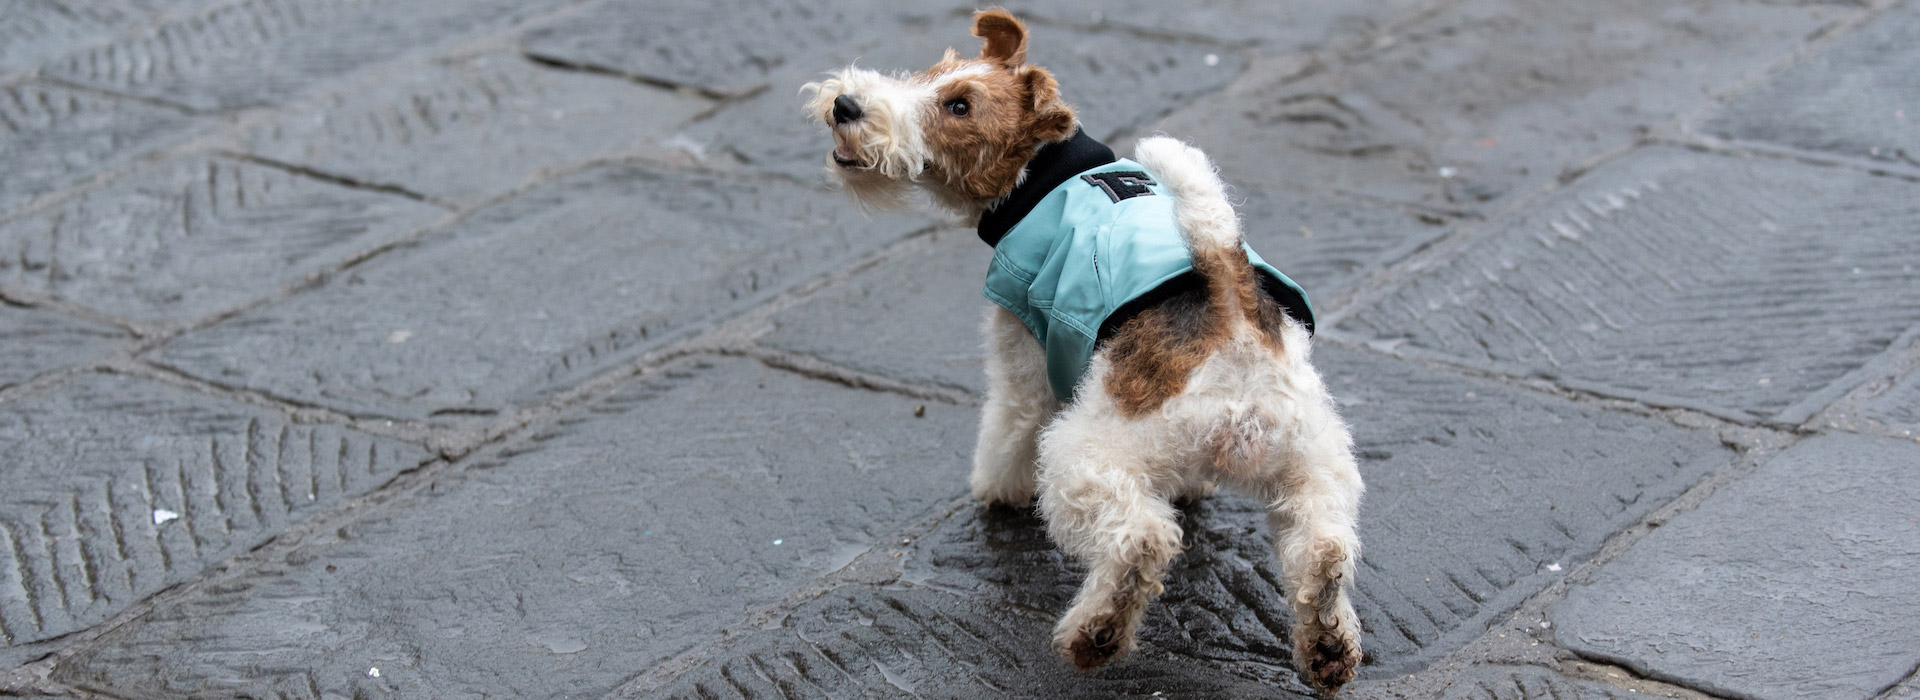 EmmaFirenze dog raincoats